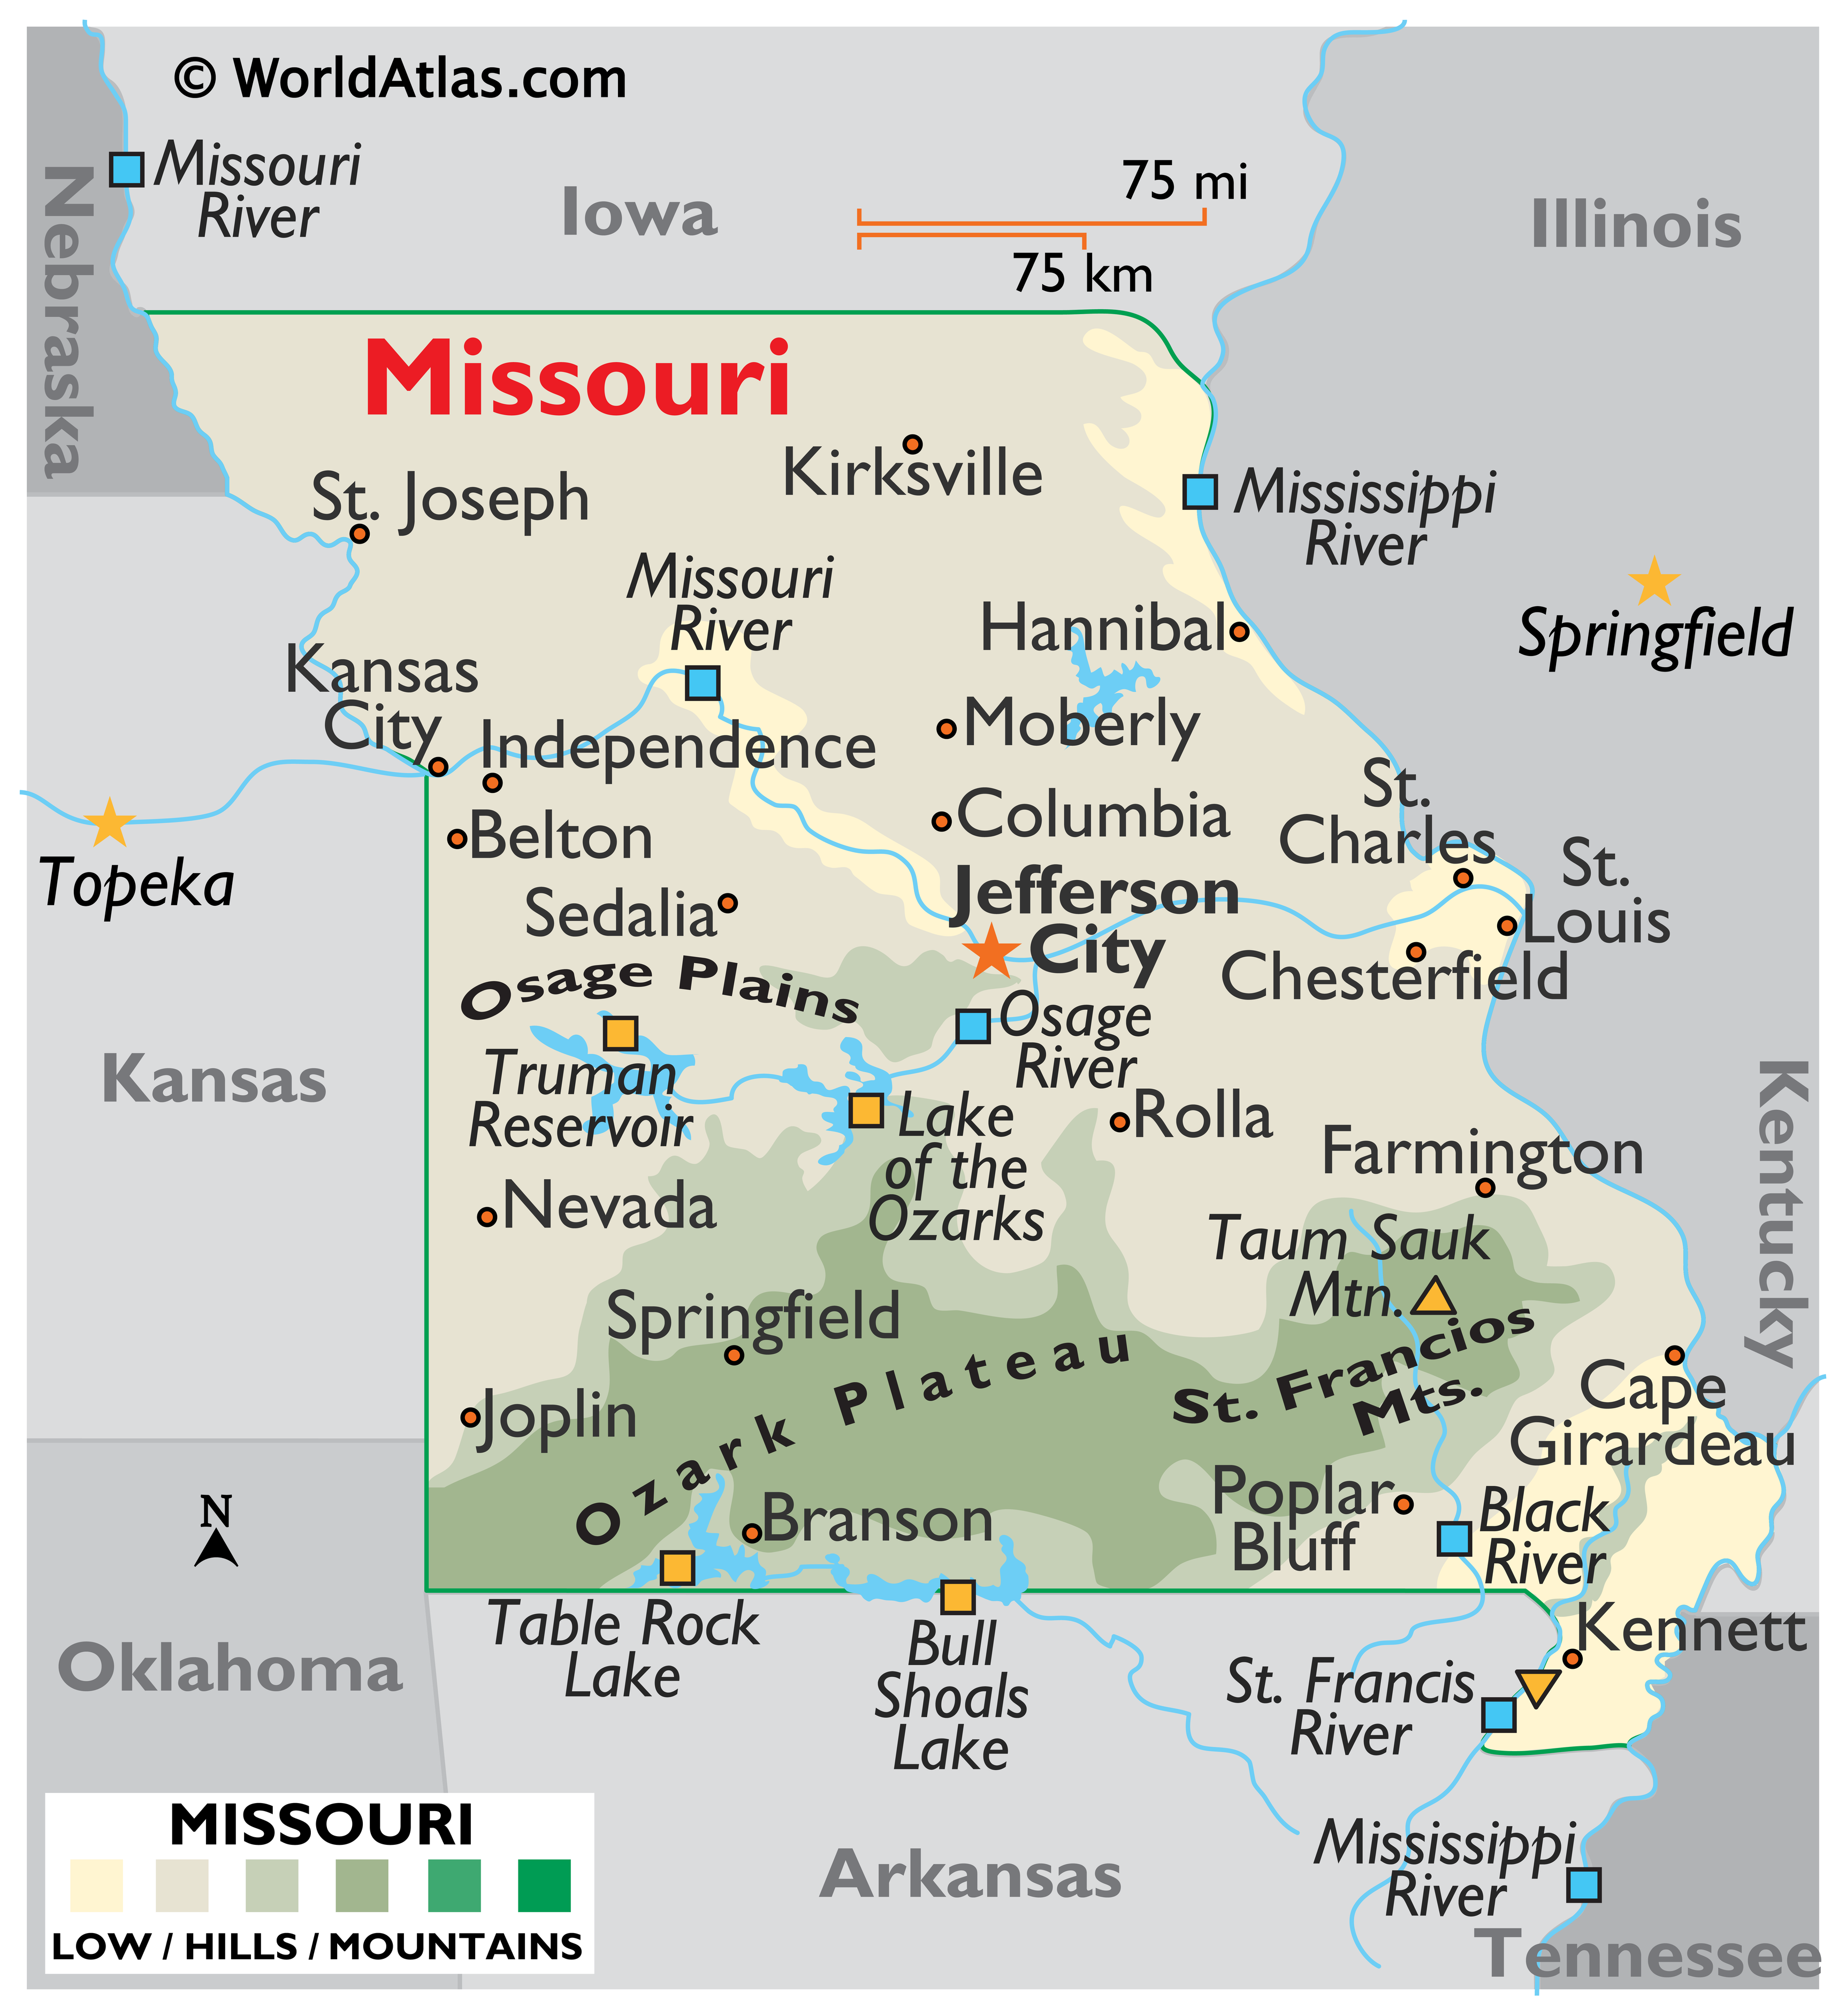 Physical Map Of Missouri Missouri Maps & Facts - World Atlas